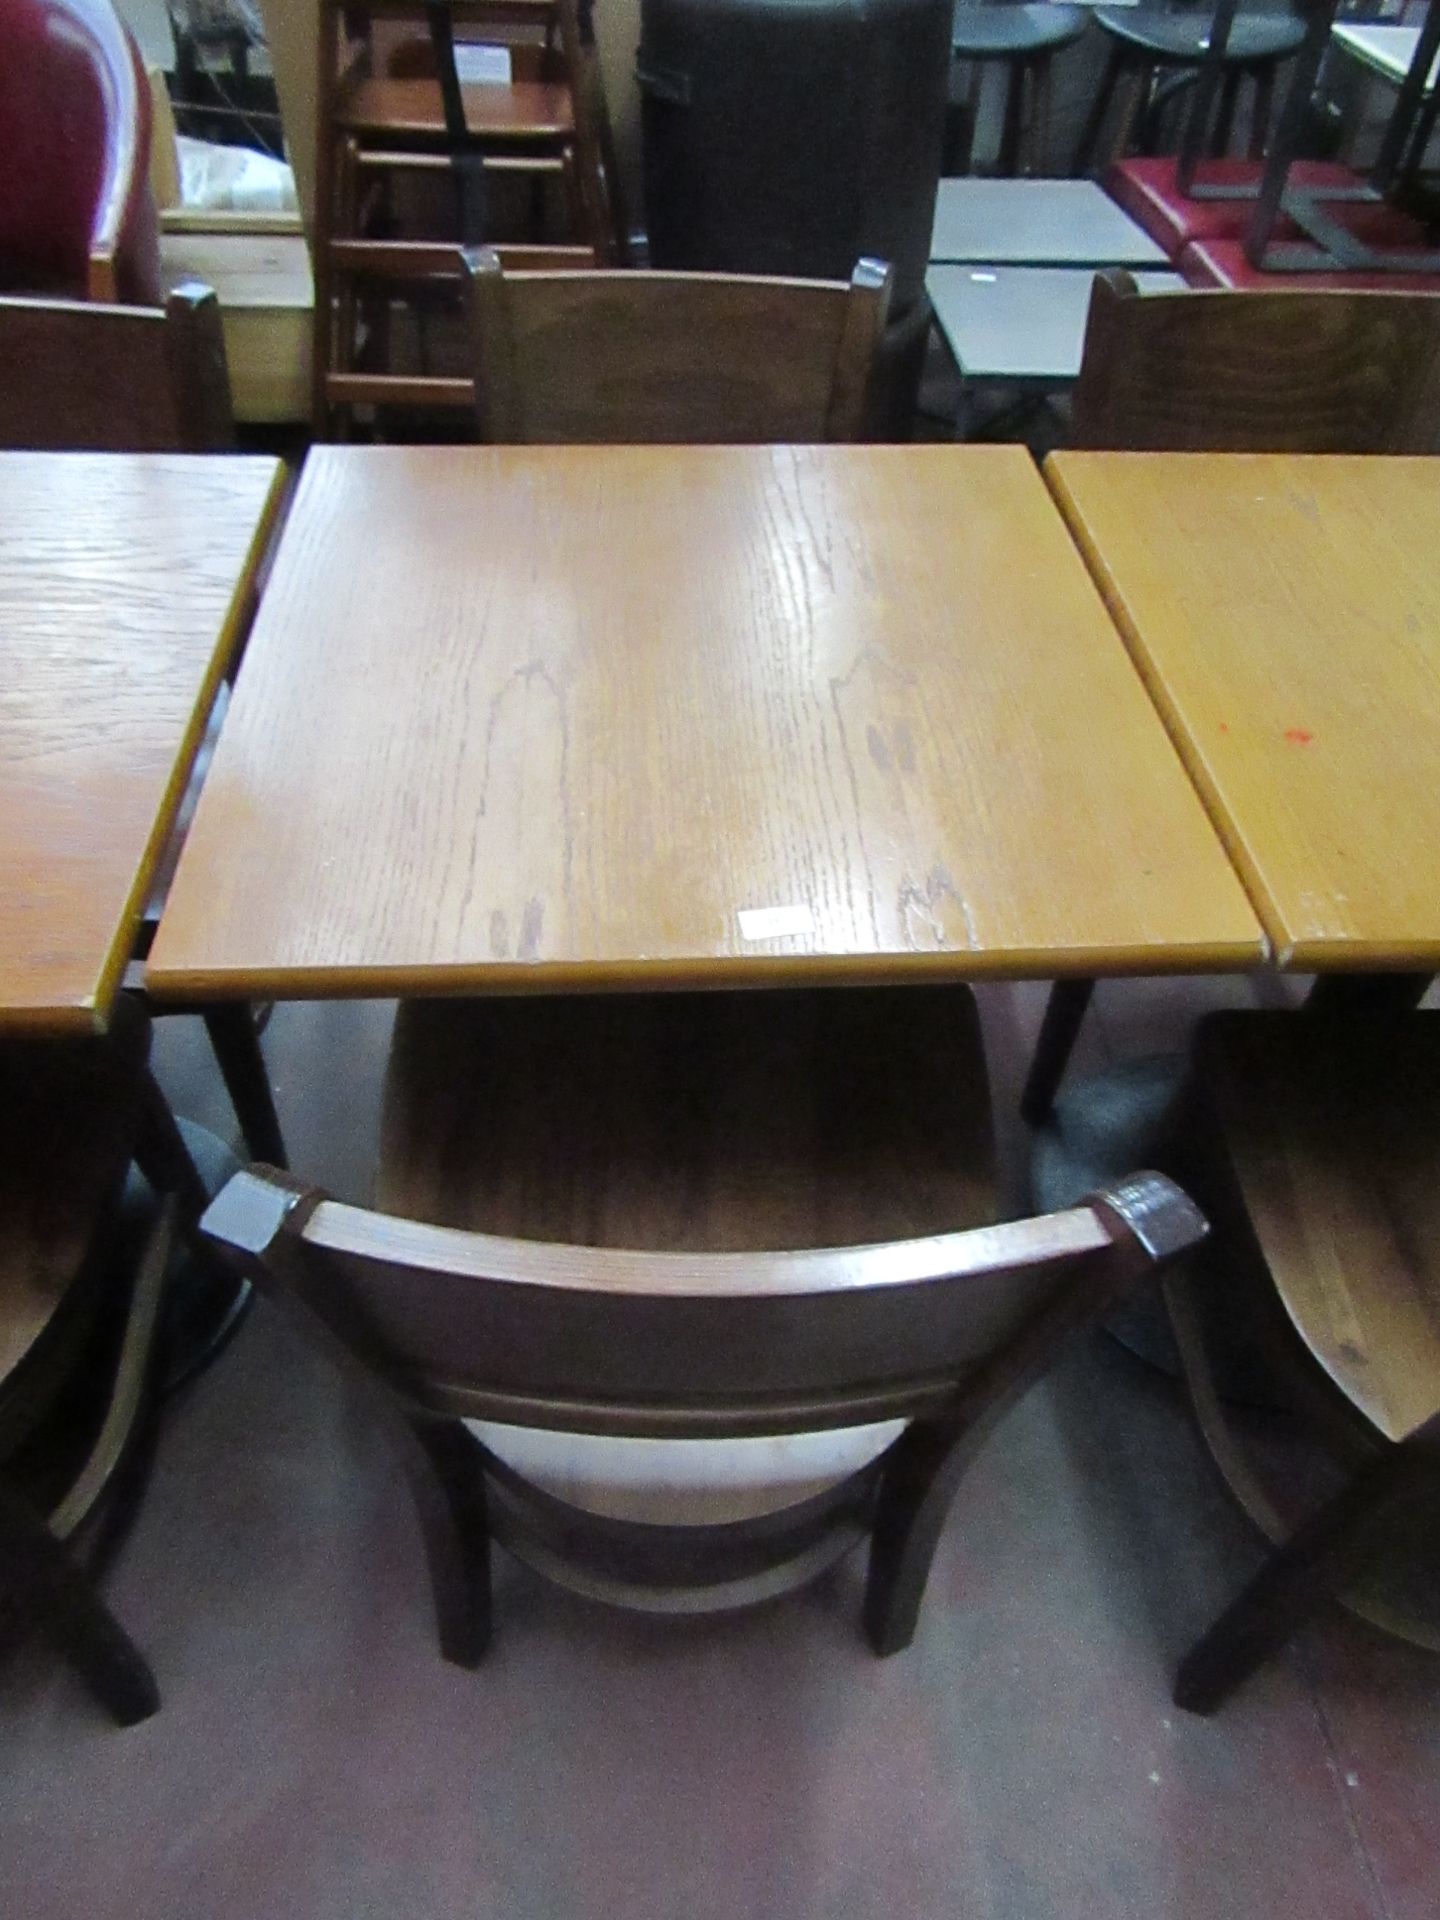 1x Table & 2x chair set.